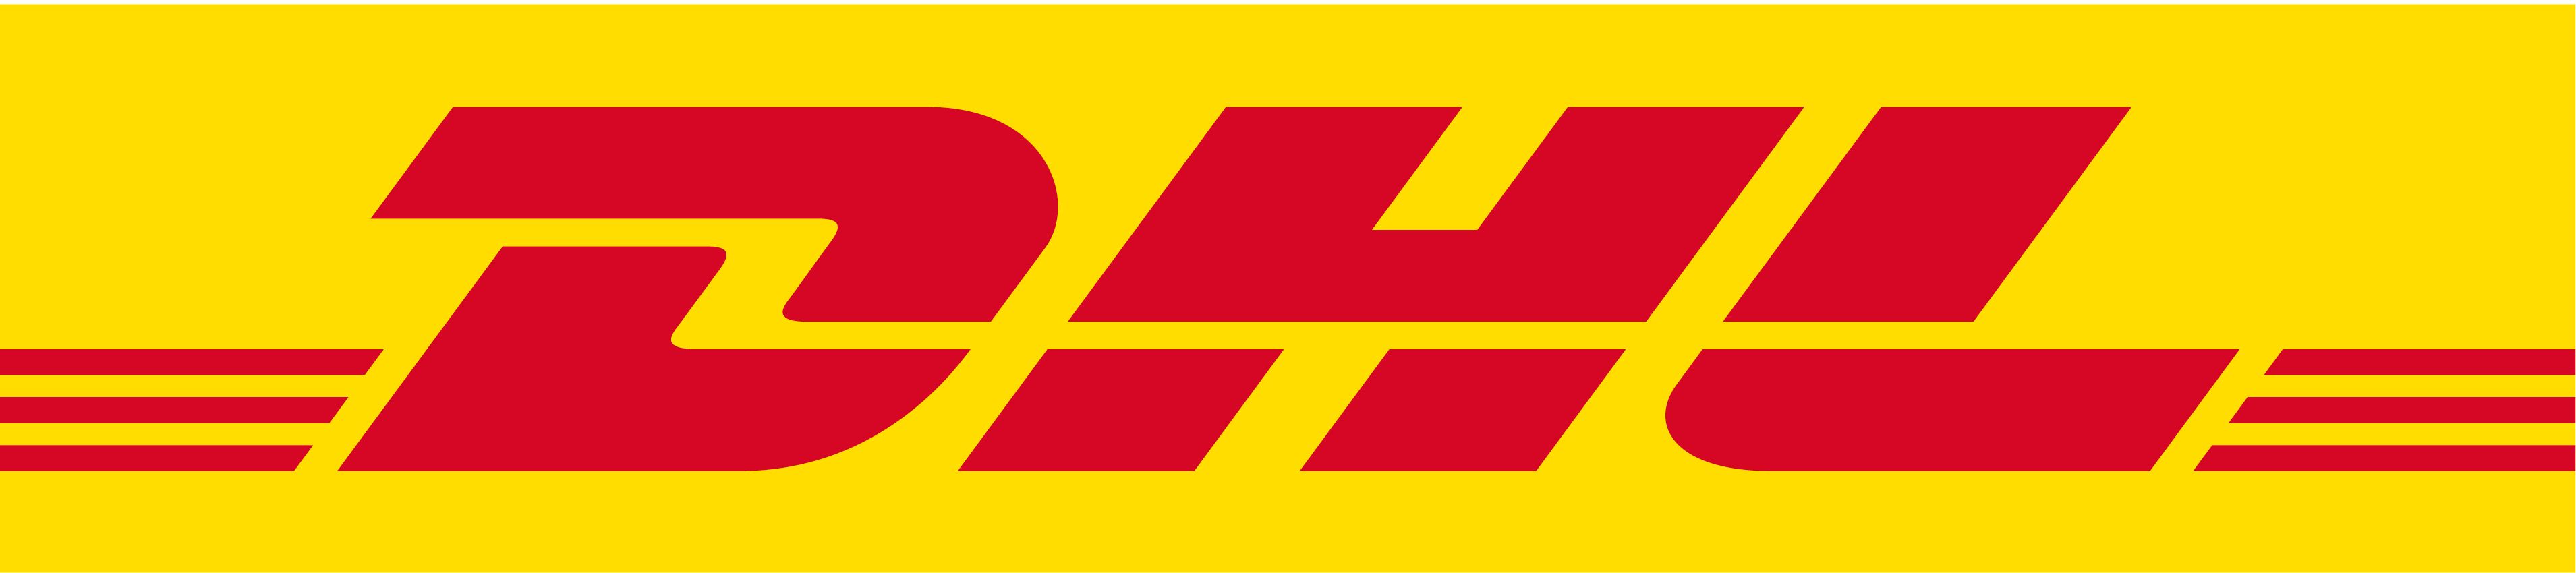 DHL Logo CMYK